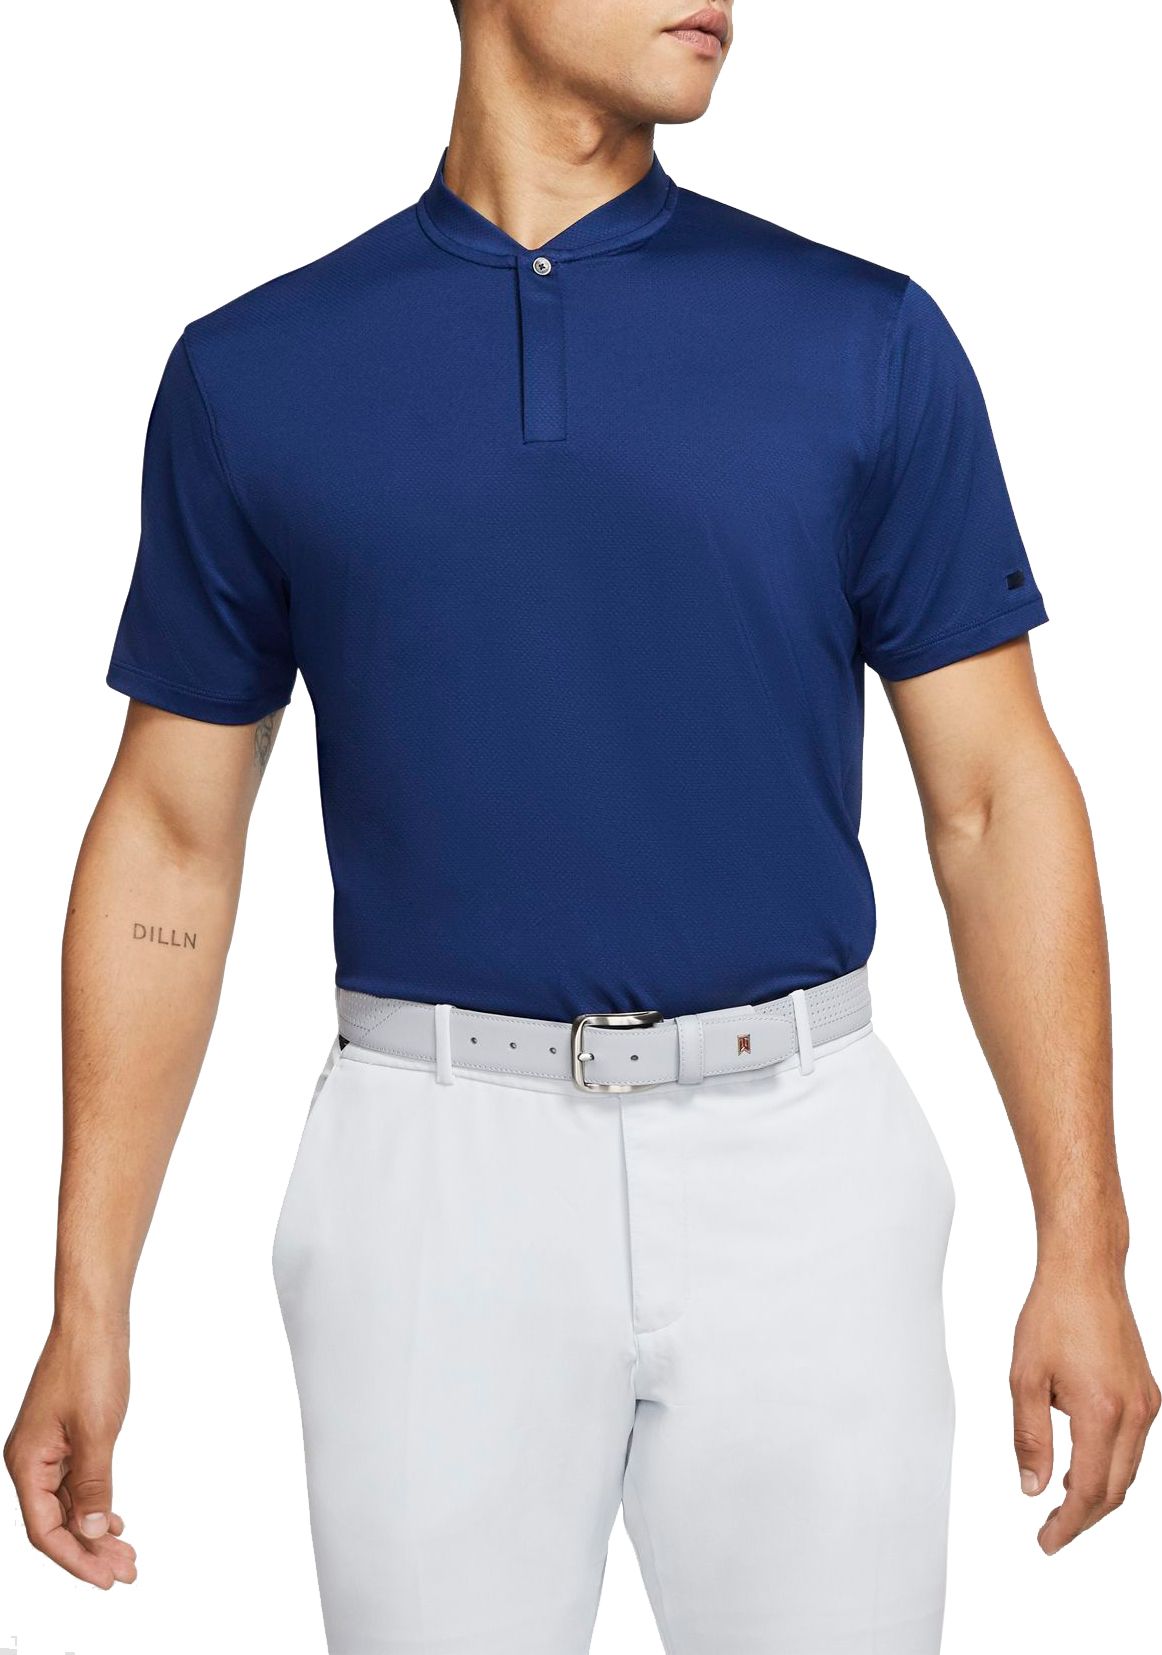 blade collar golf shirts